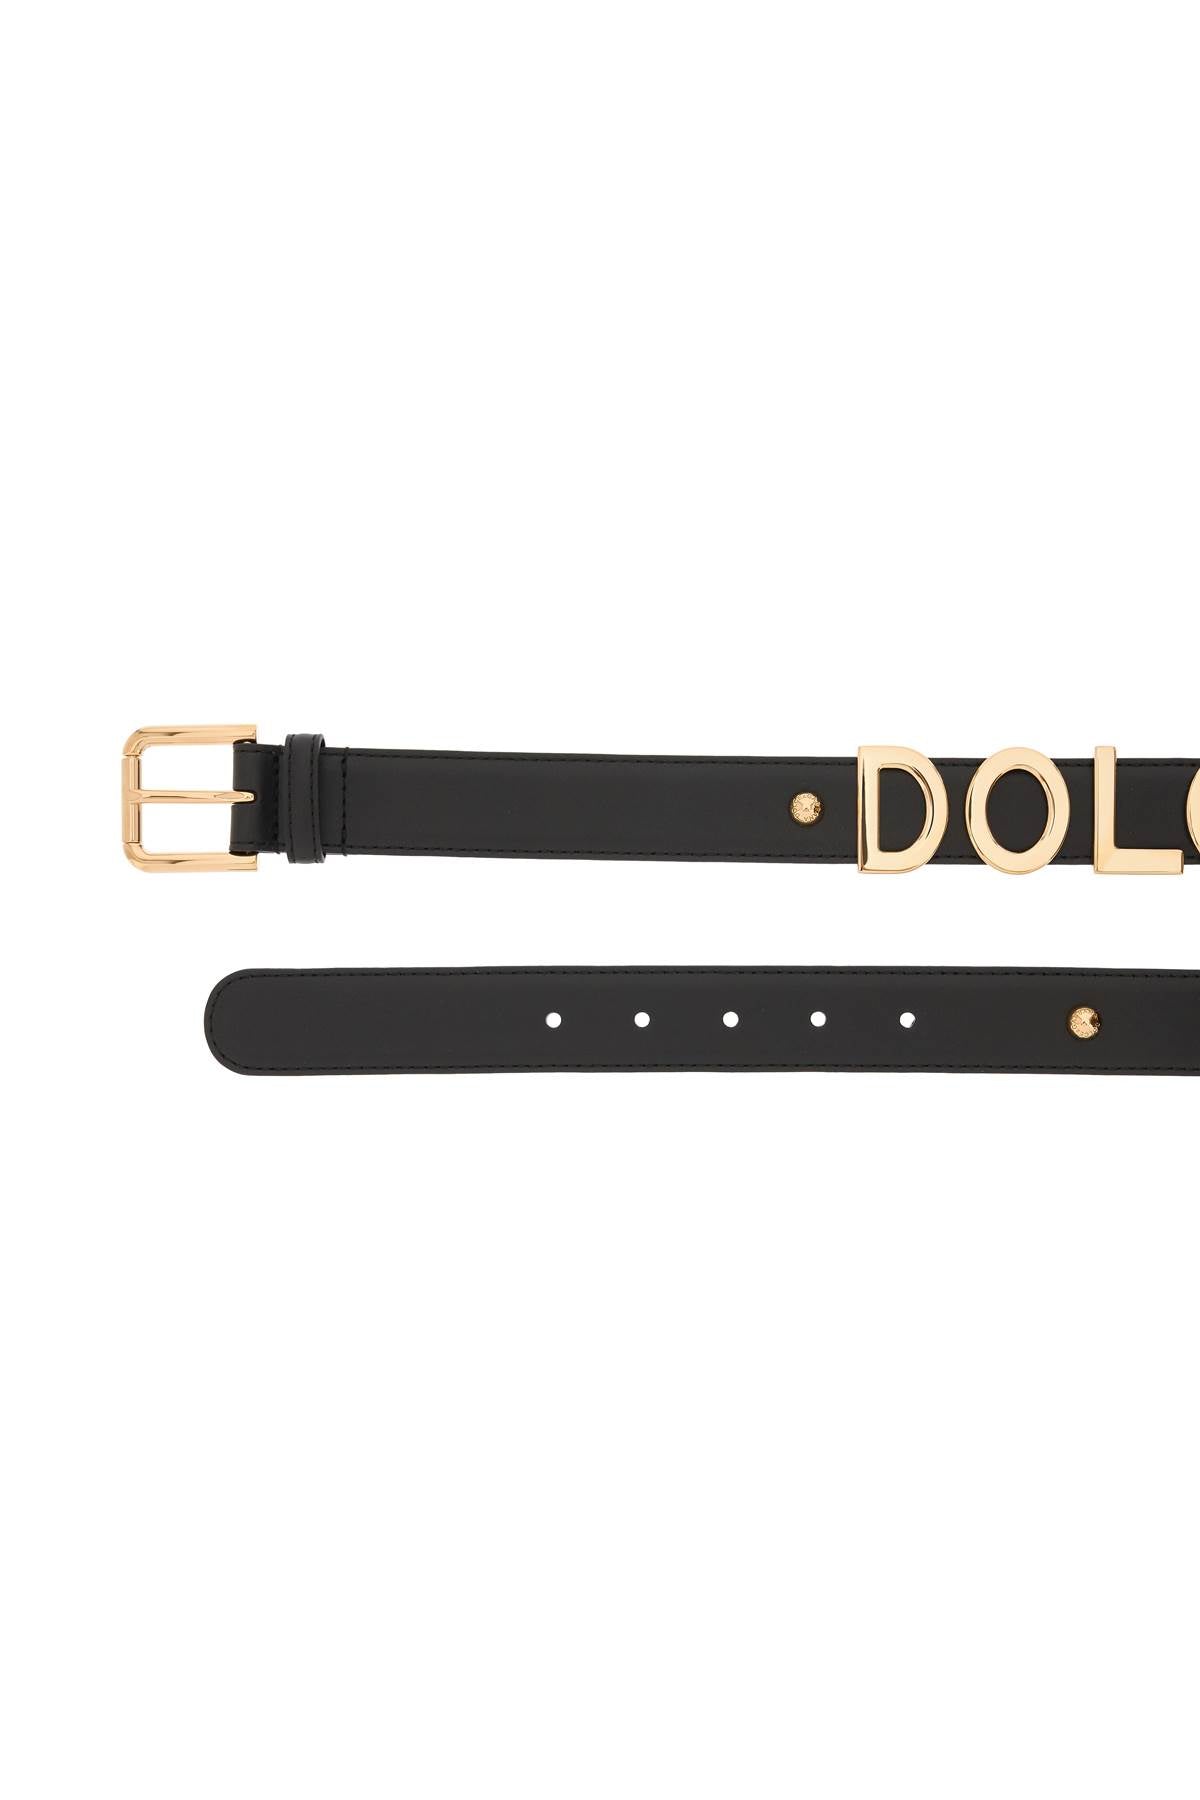 Dolce & gabbana lettering logo leather belt-1